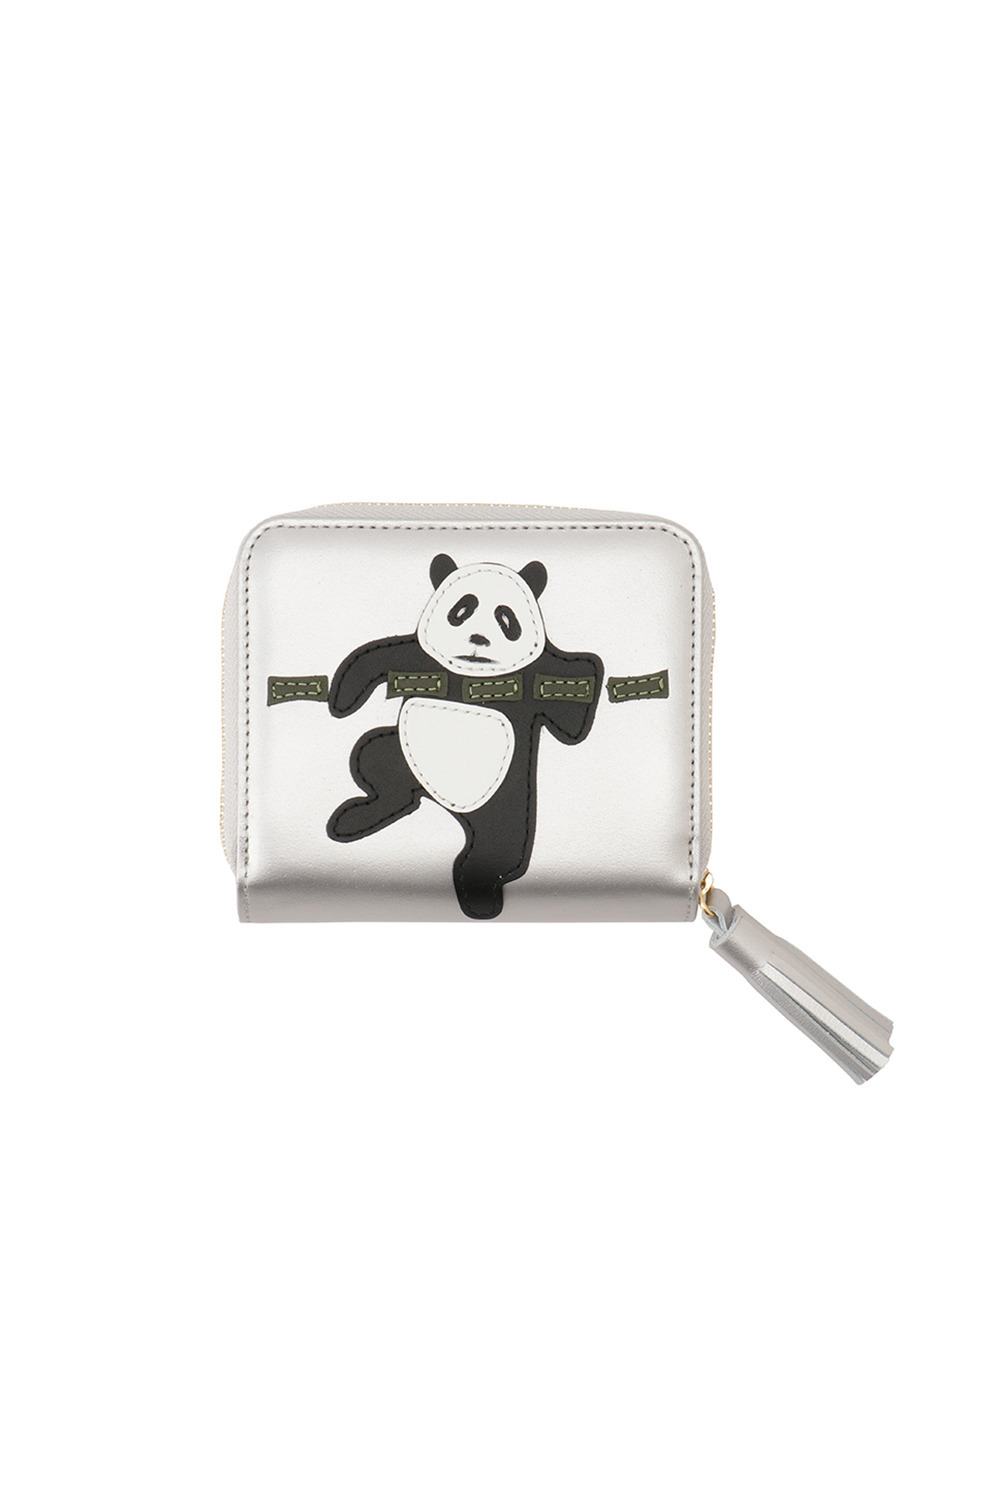 Bamboo PANDA small wallet 詳細画像 シルバー